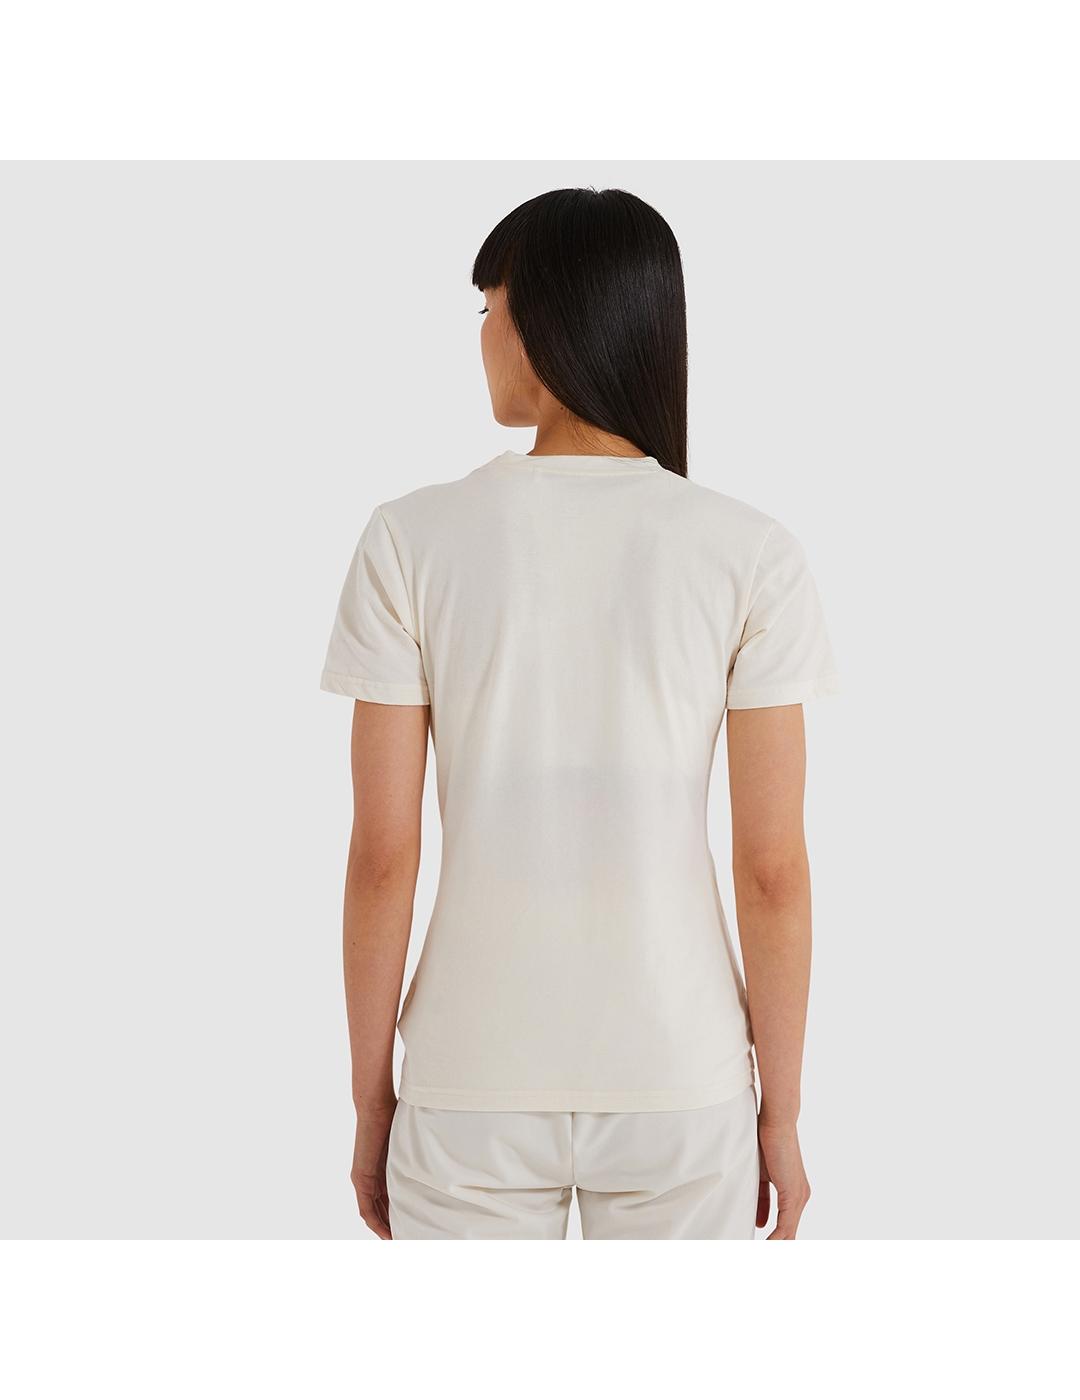 Camiseta Ellesse loril off white de mujer